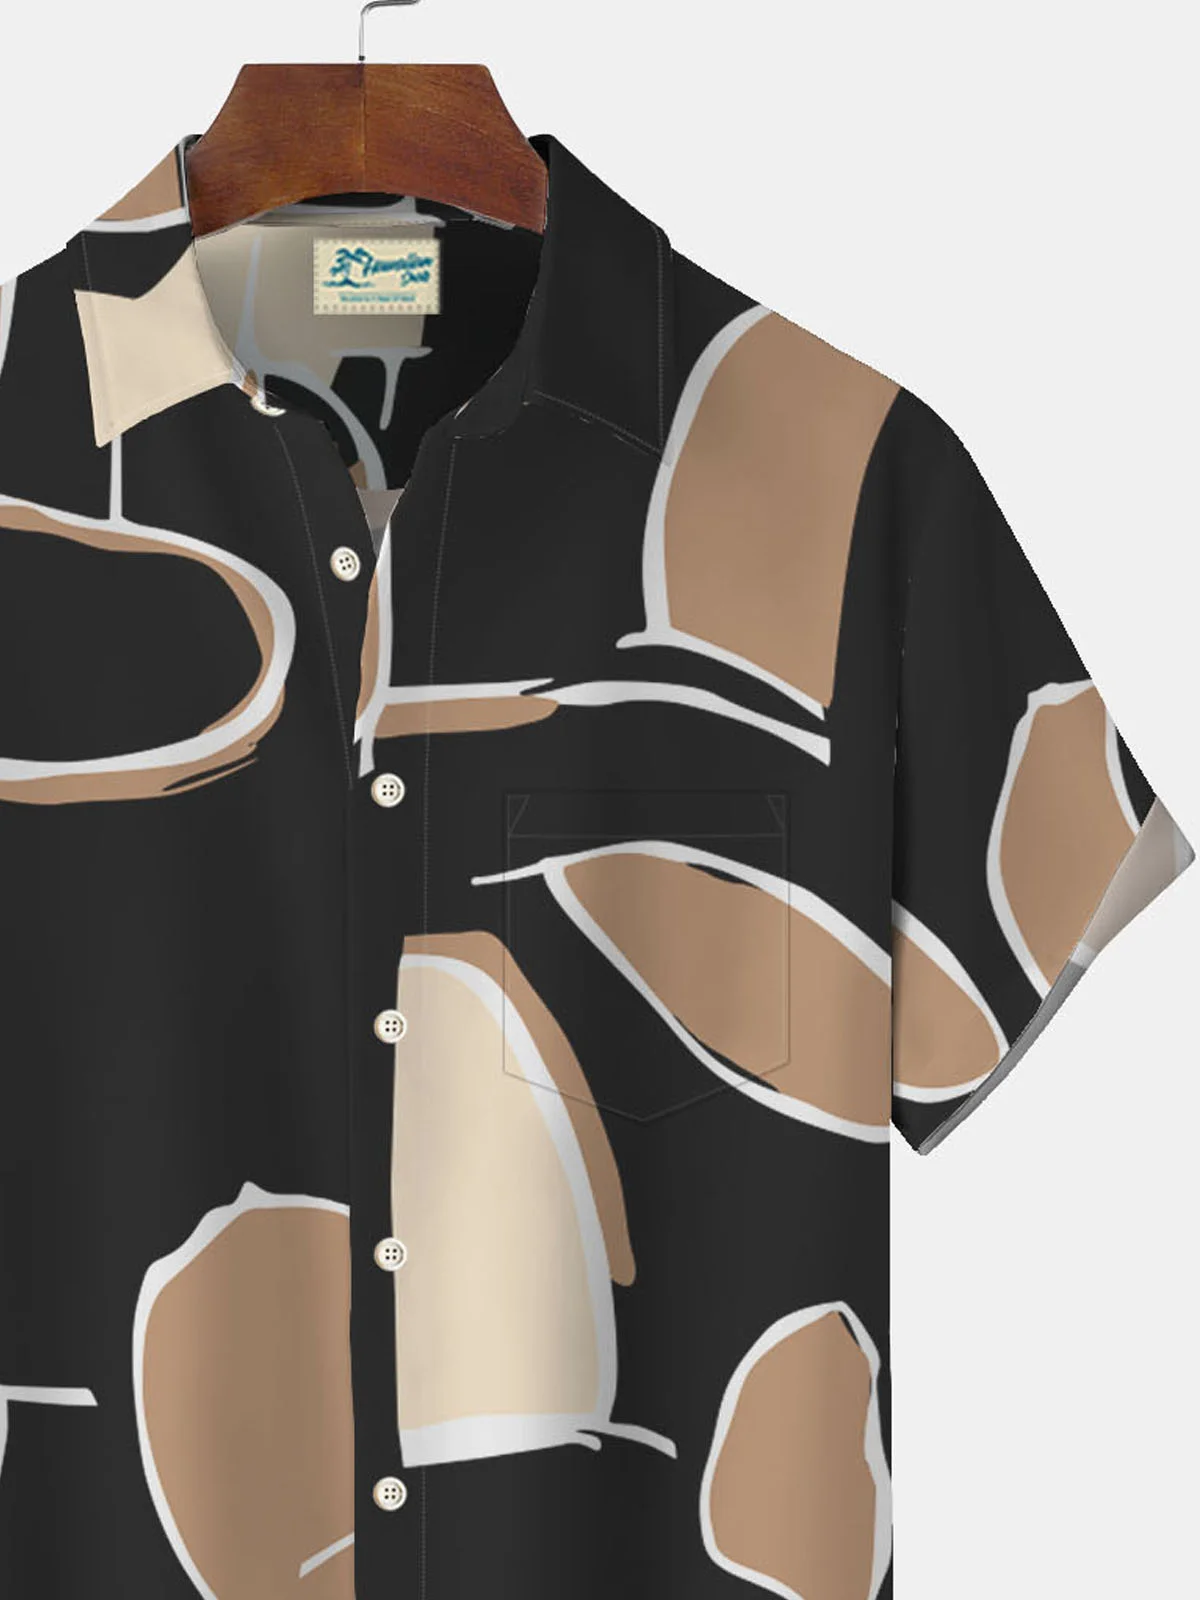 Royaura Geometric Art Print Men's Button Pocket Shirt